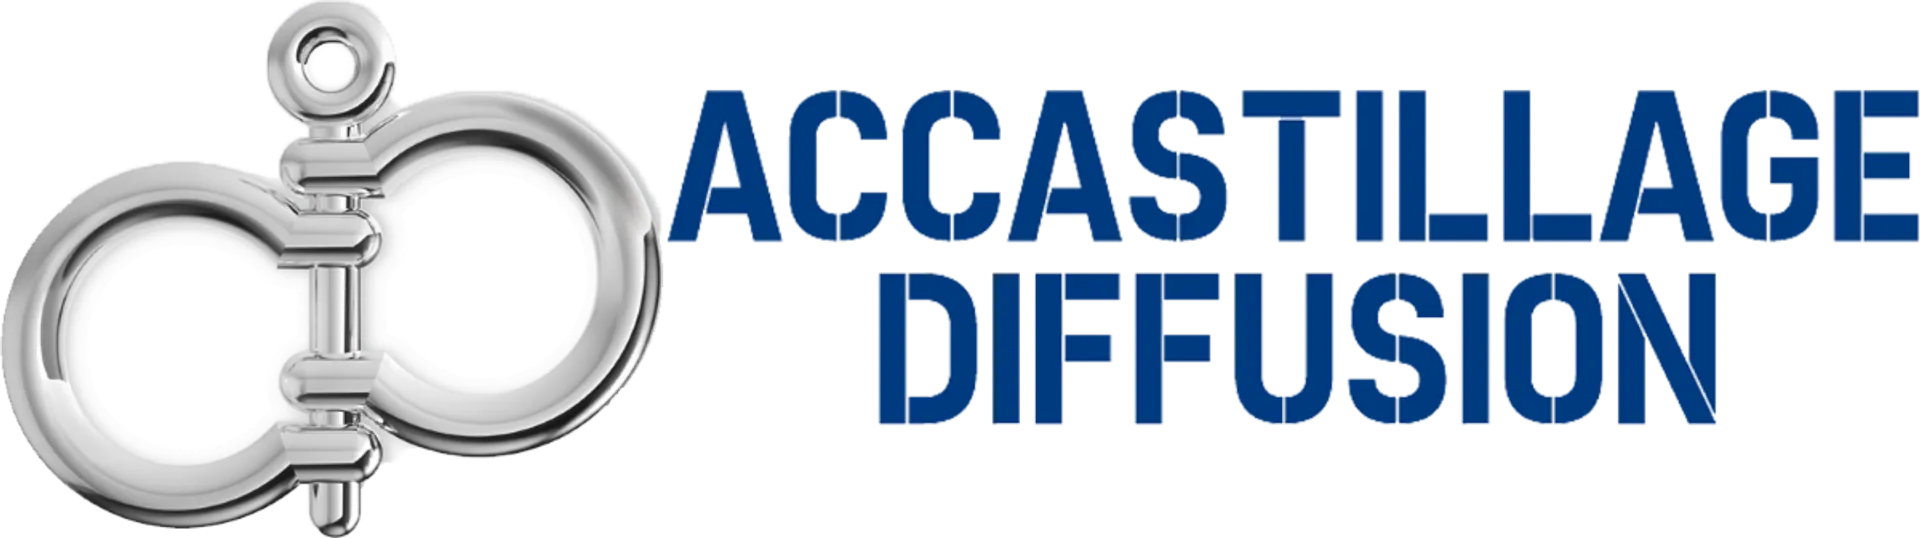 ACCASTILLAGE DIFFUSION logo du catalogue